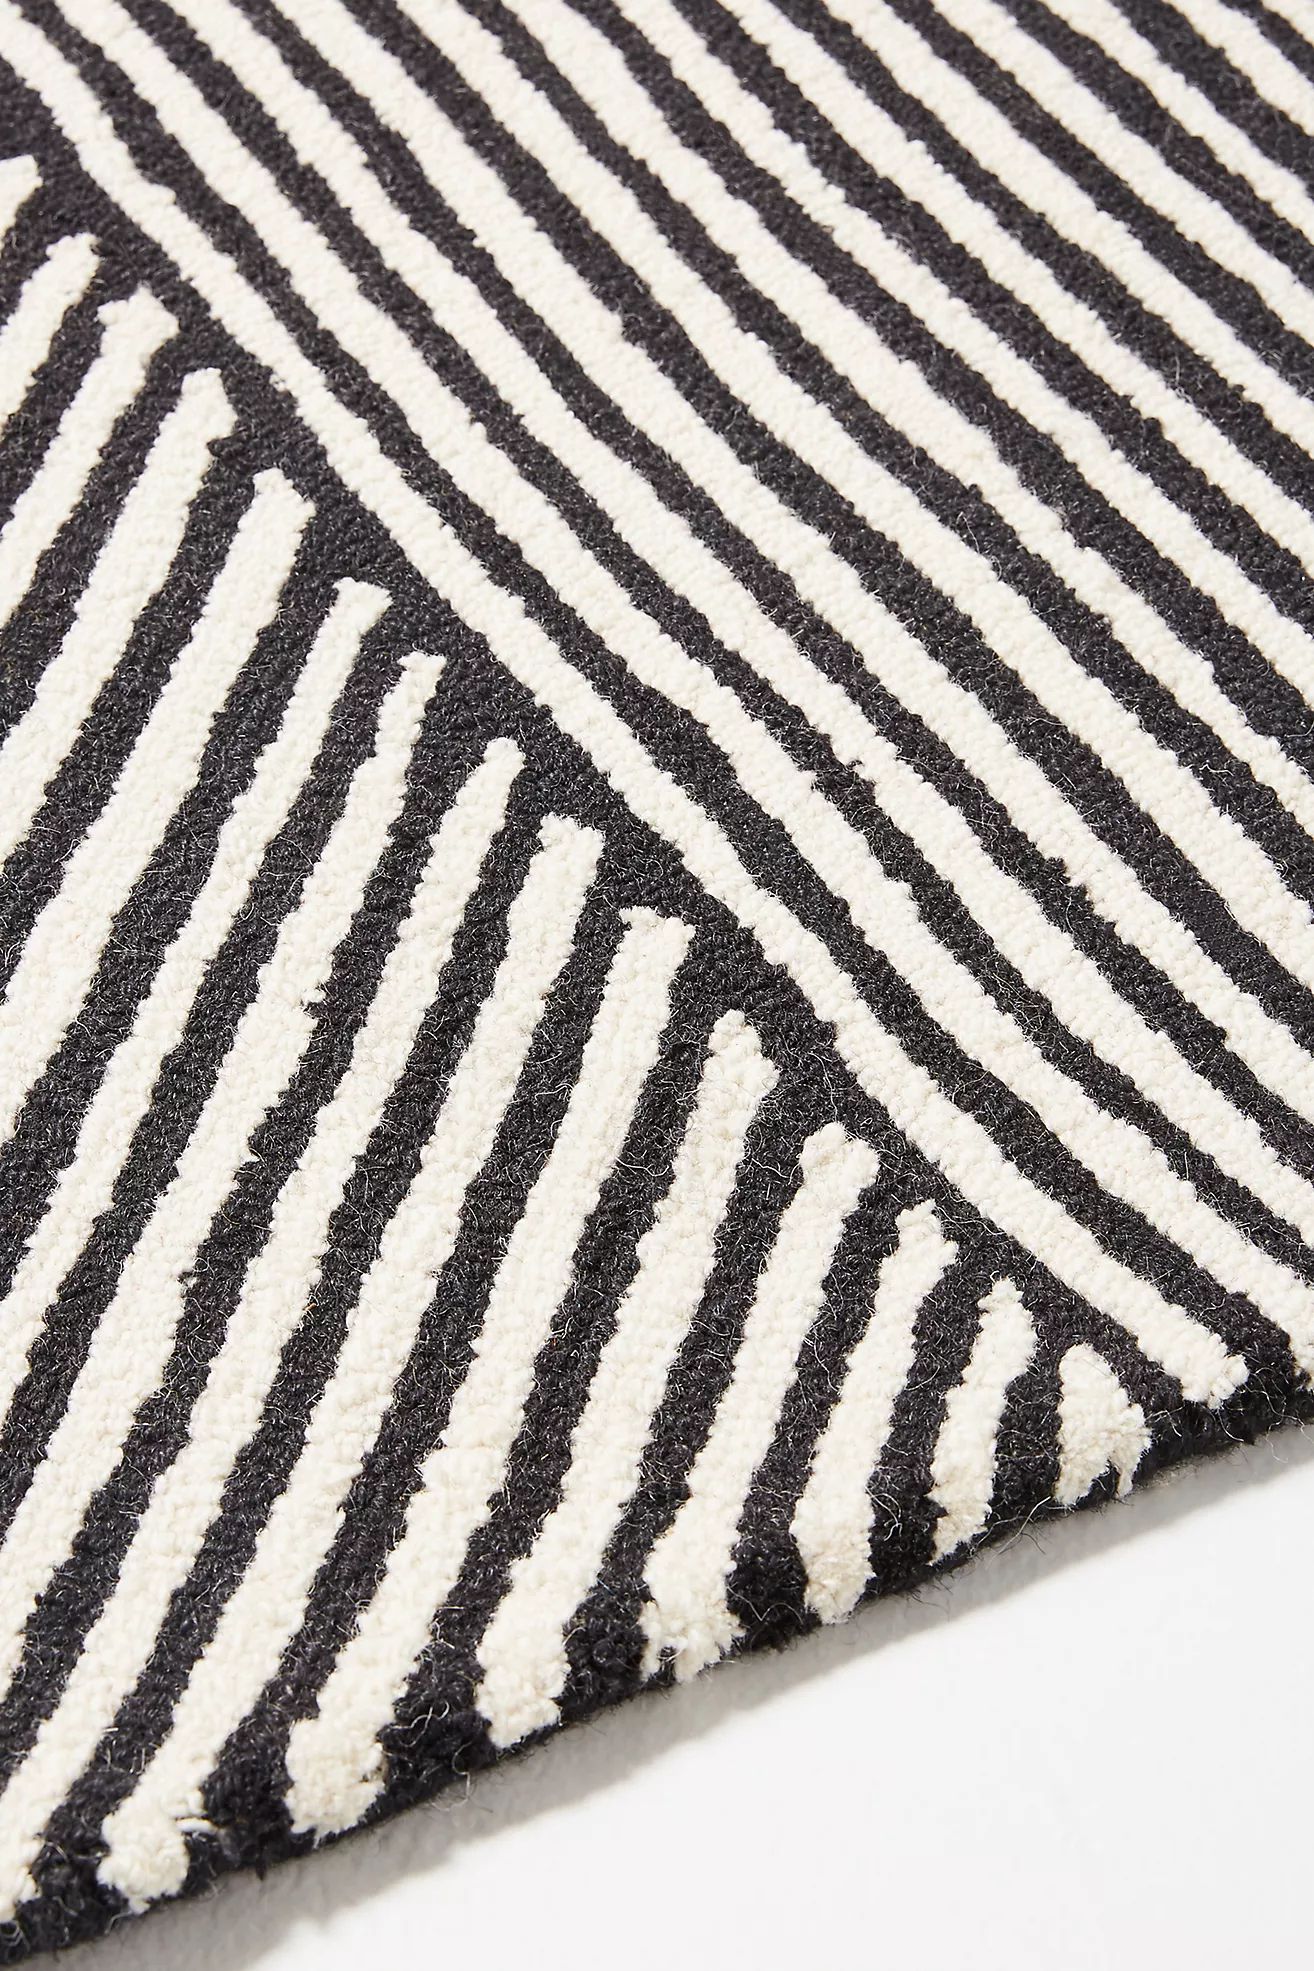 Tufted Stripe Illusion Rug | Anthropologie (US)